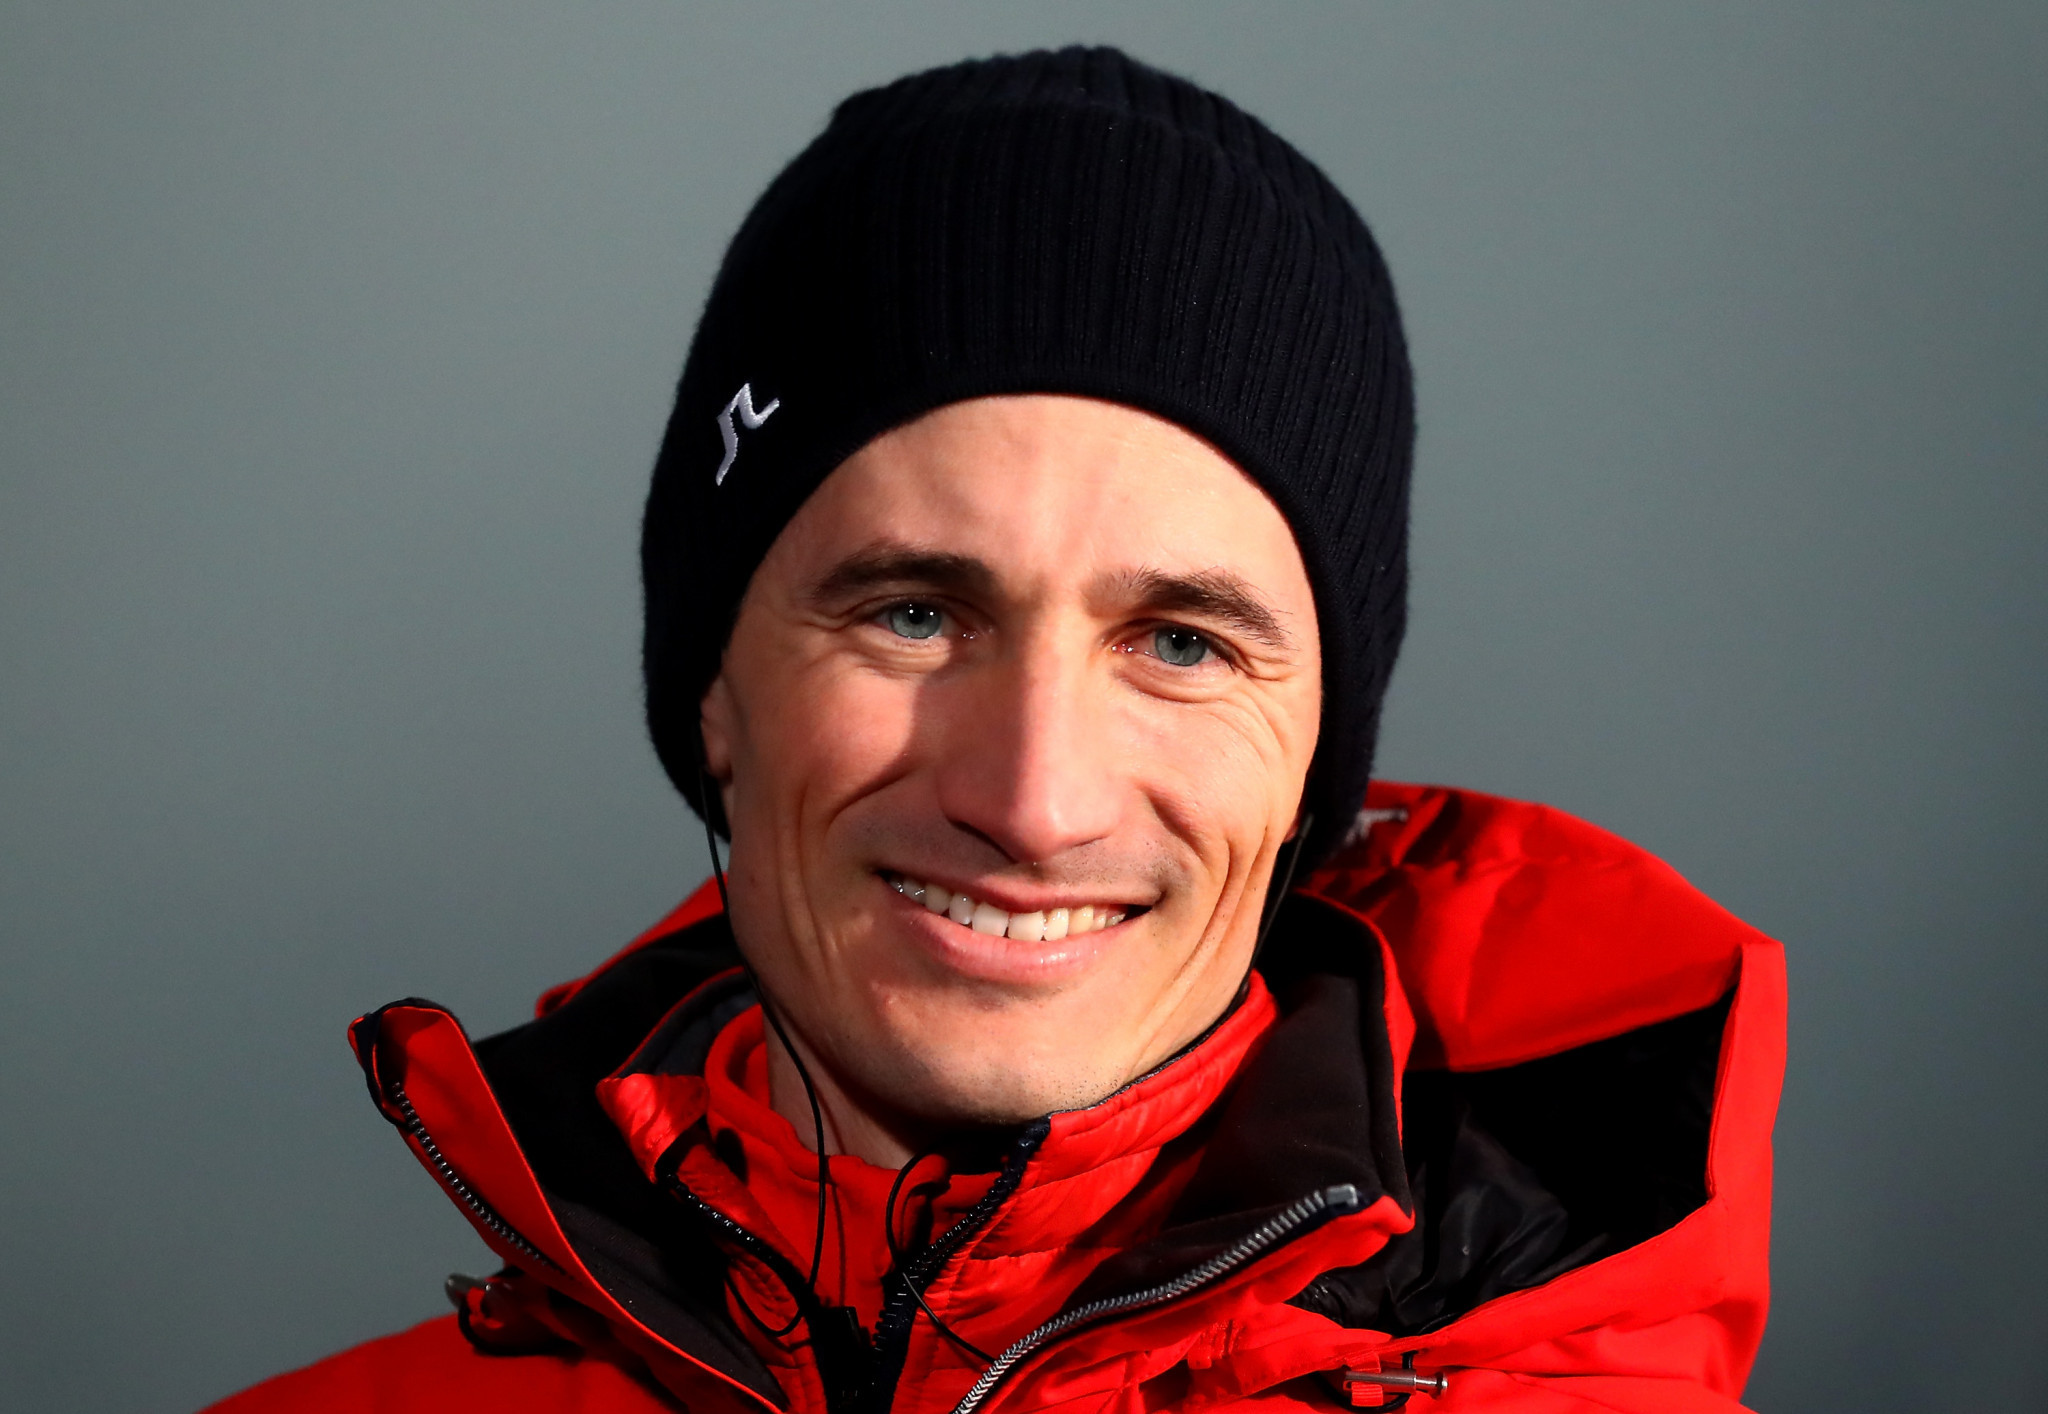 German Ski Association appoint Olympic ski jumping gold medallist Martin Schmitt as talent scout